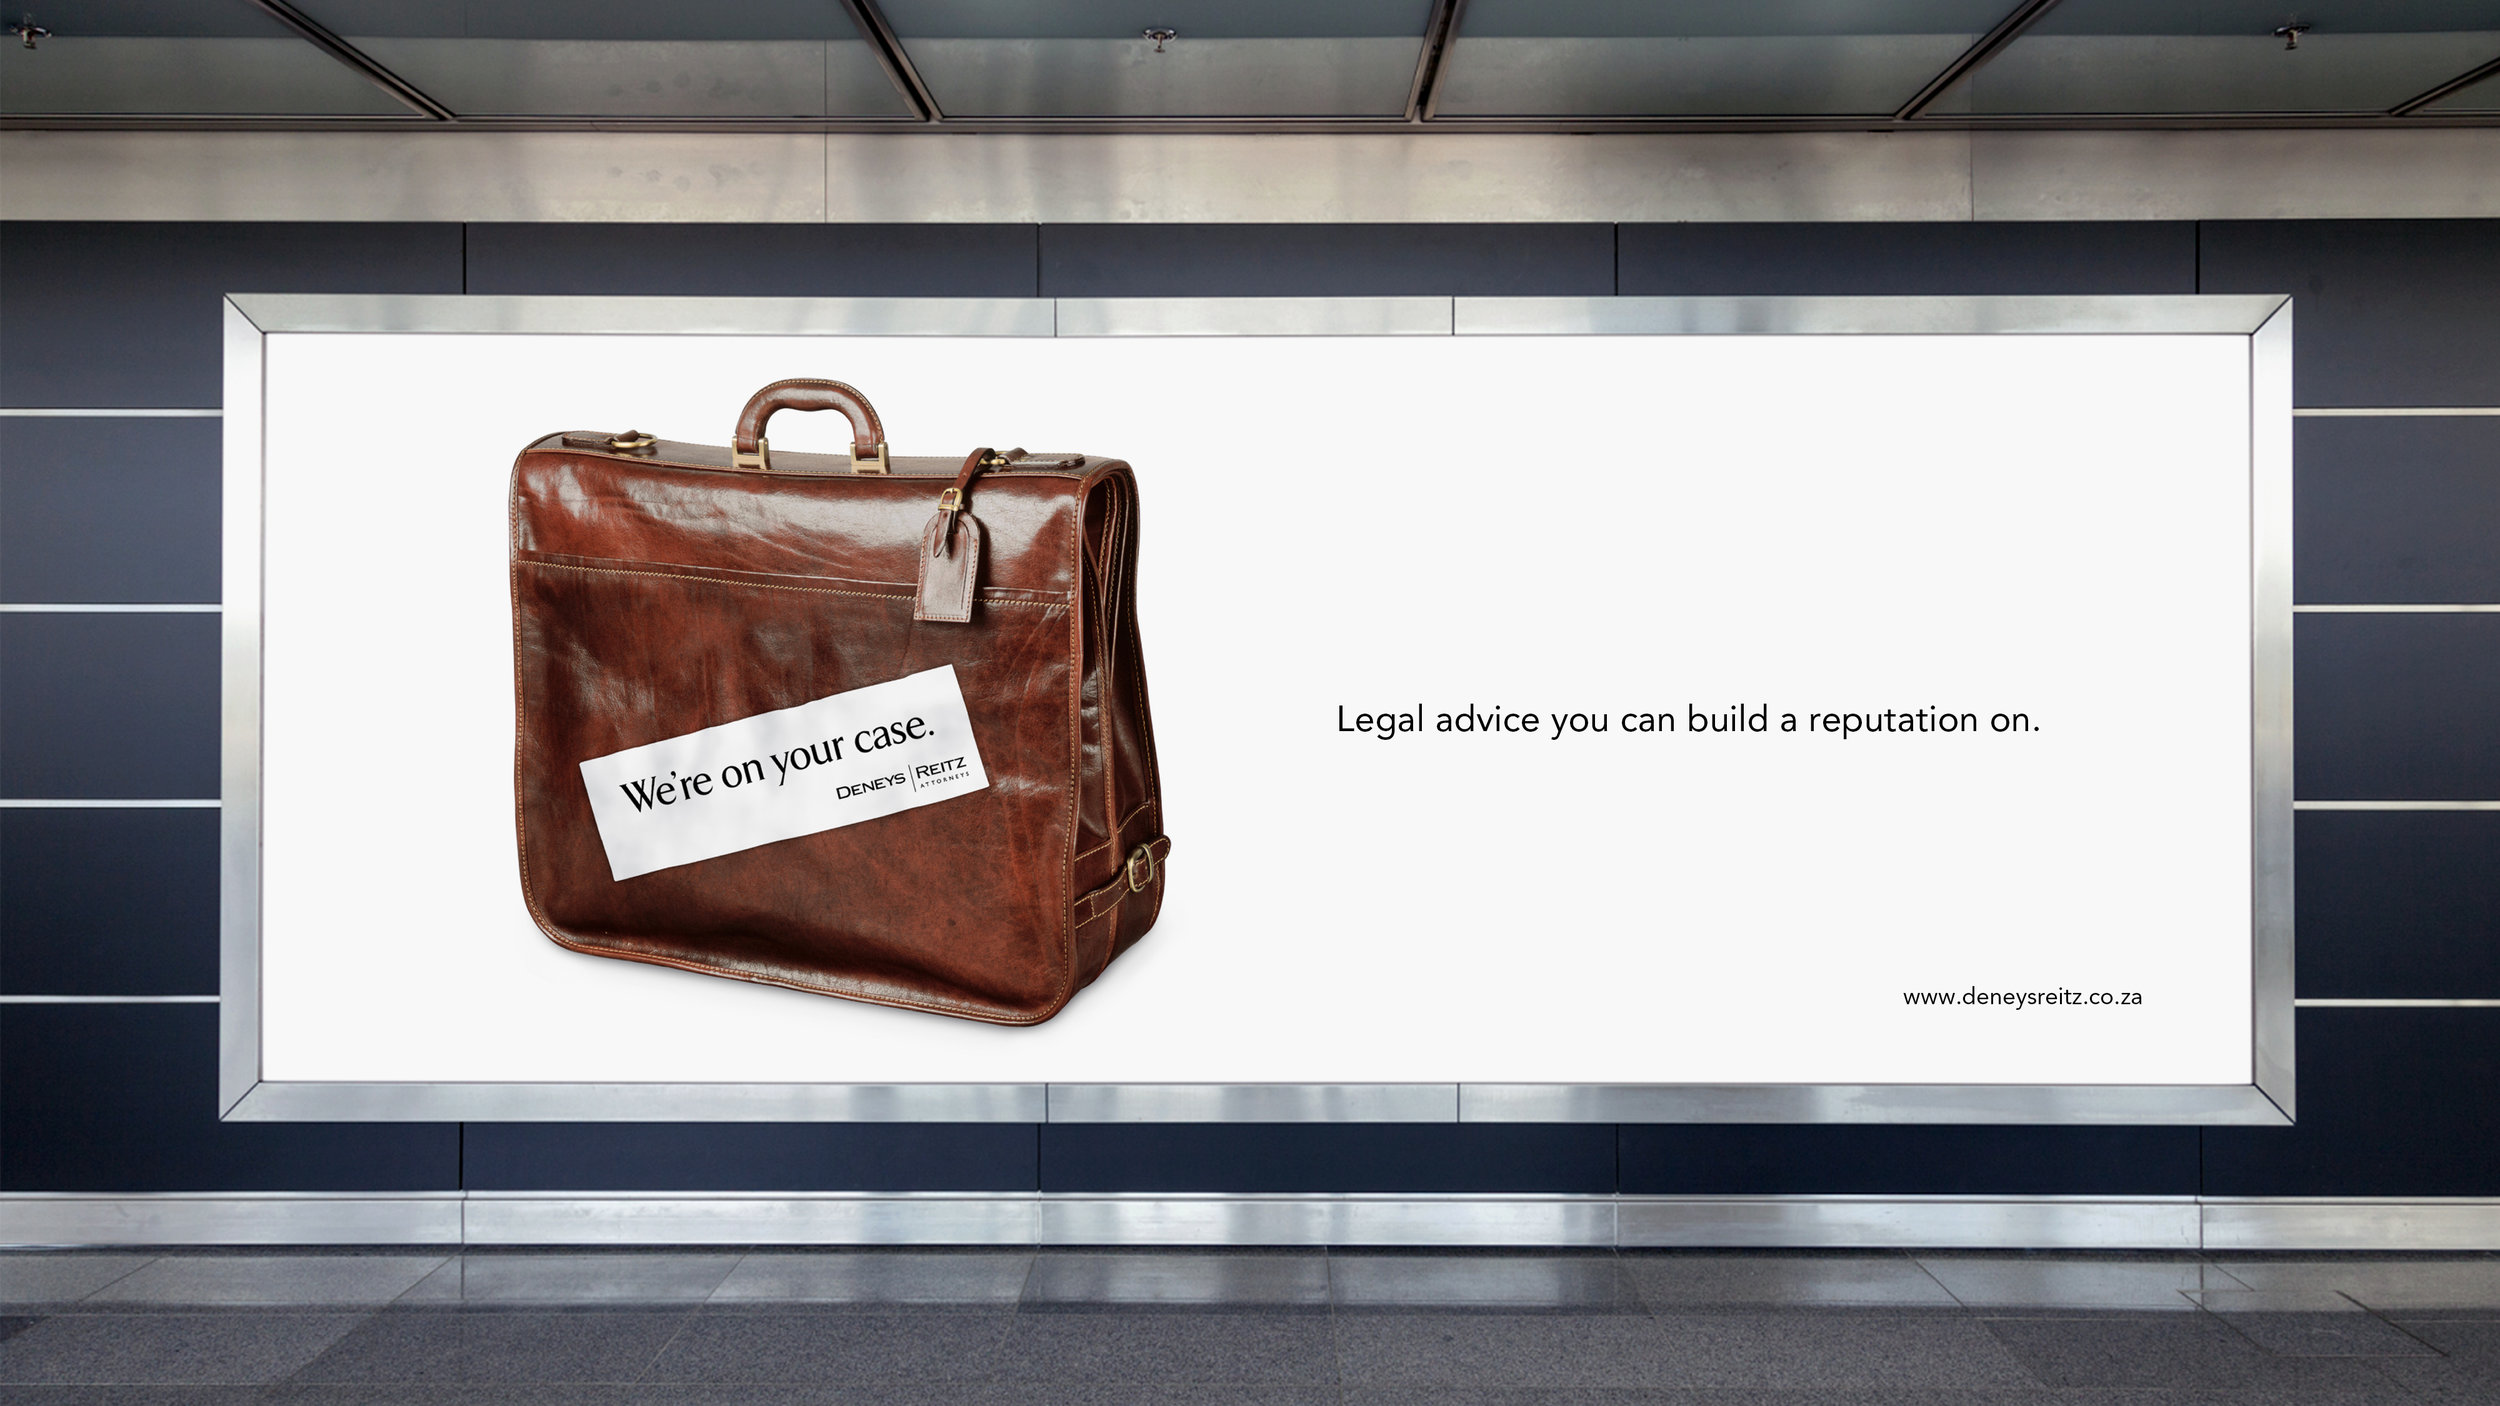 Brand_republica_airport_billboard_advertising_deneysreitz_attorneys_02.jpg